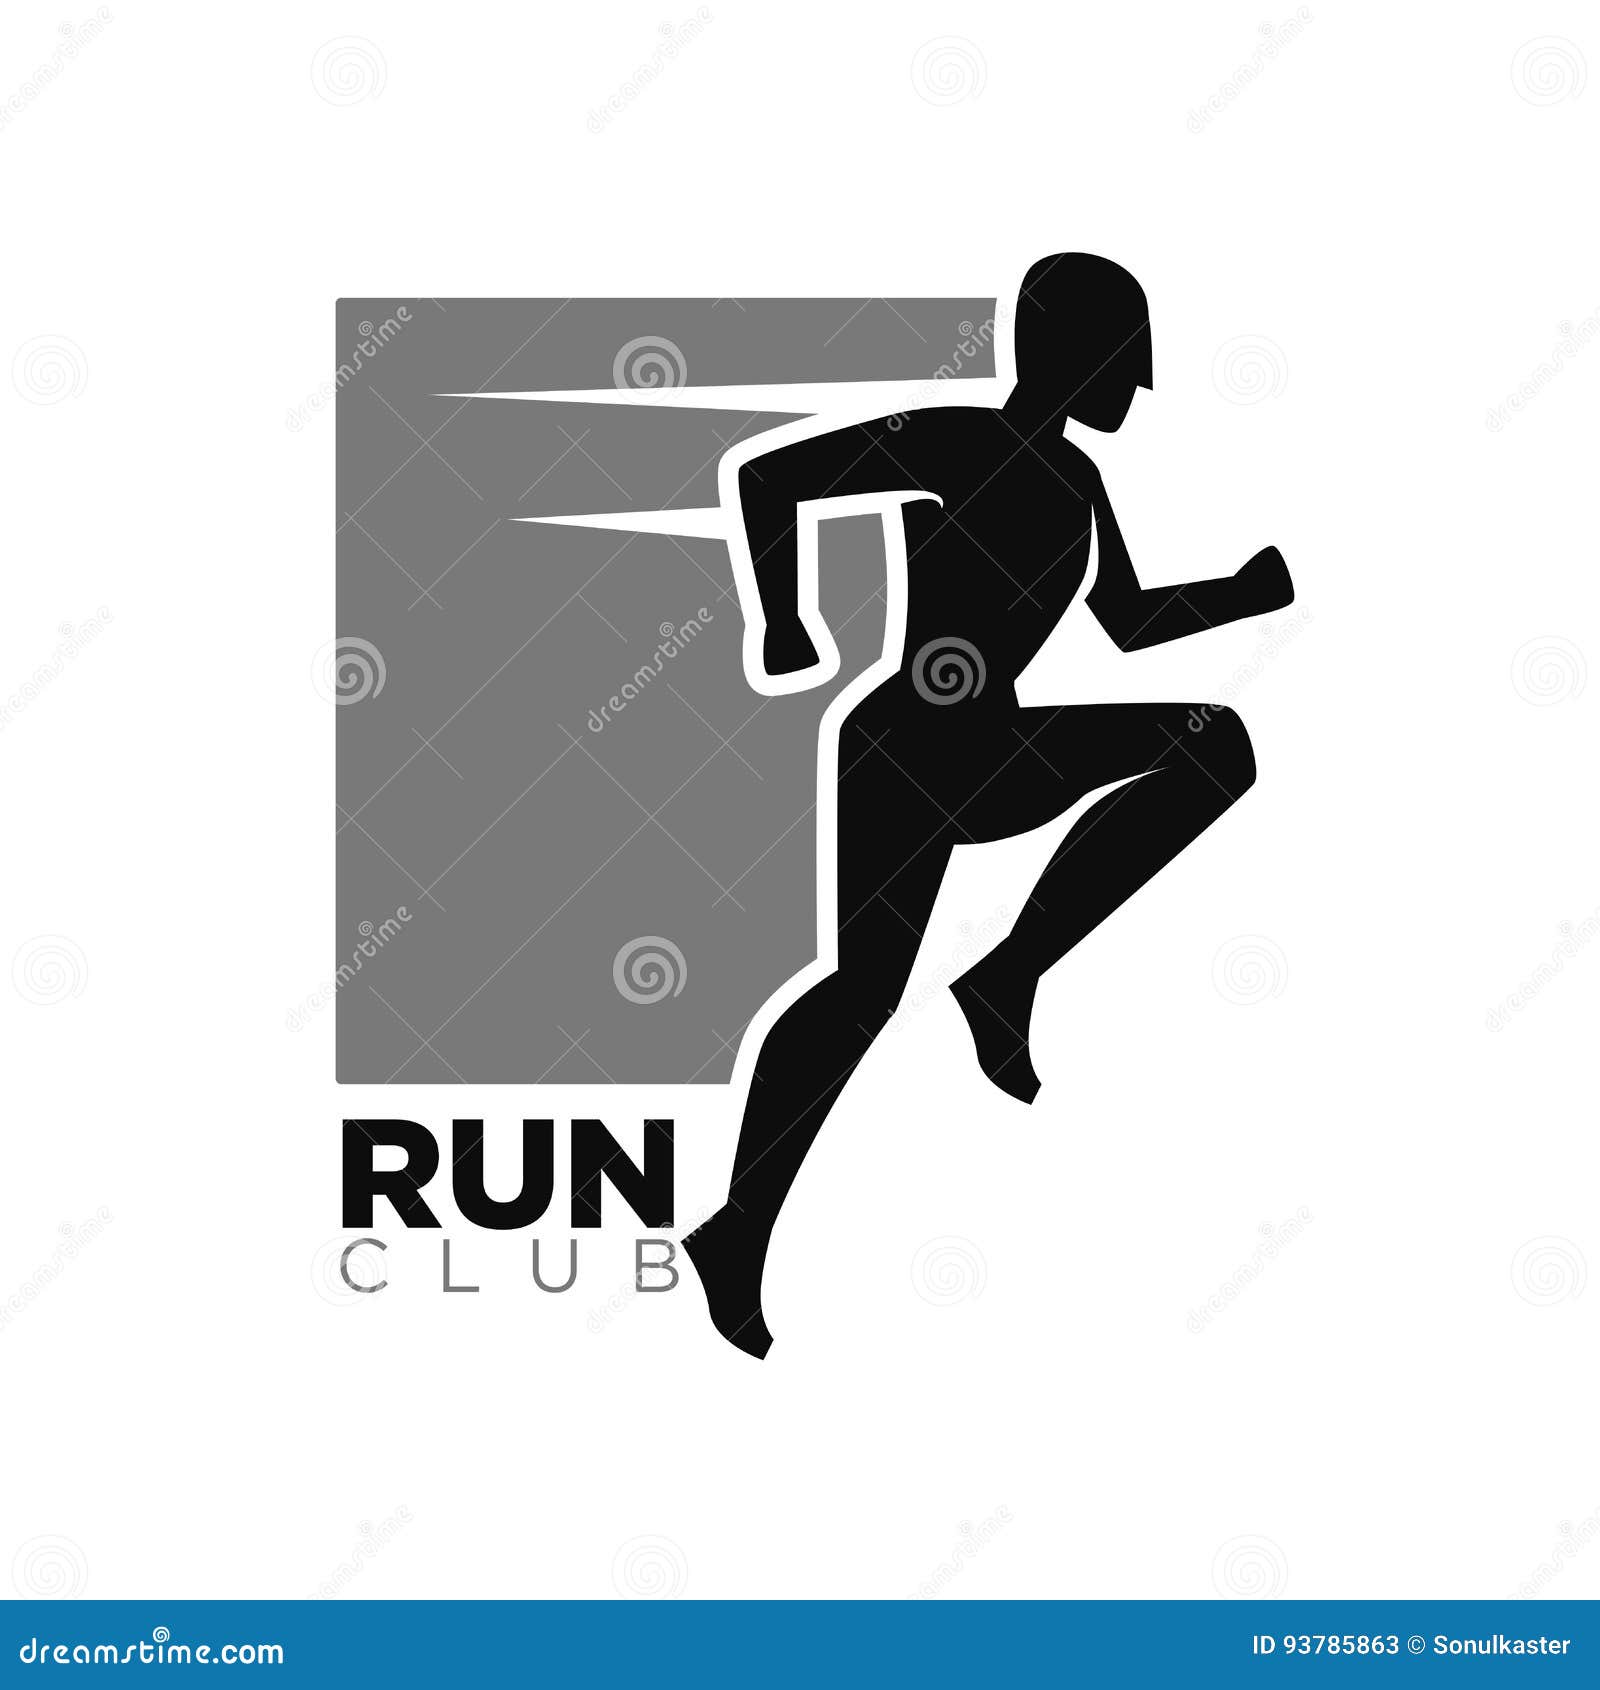 Run Club Monochrome Logotype with Human in Move Stock Vector ...